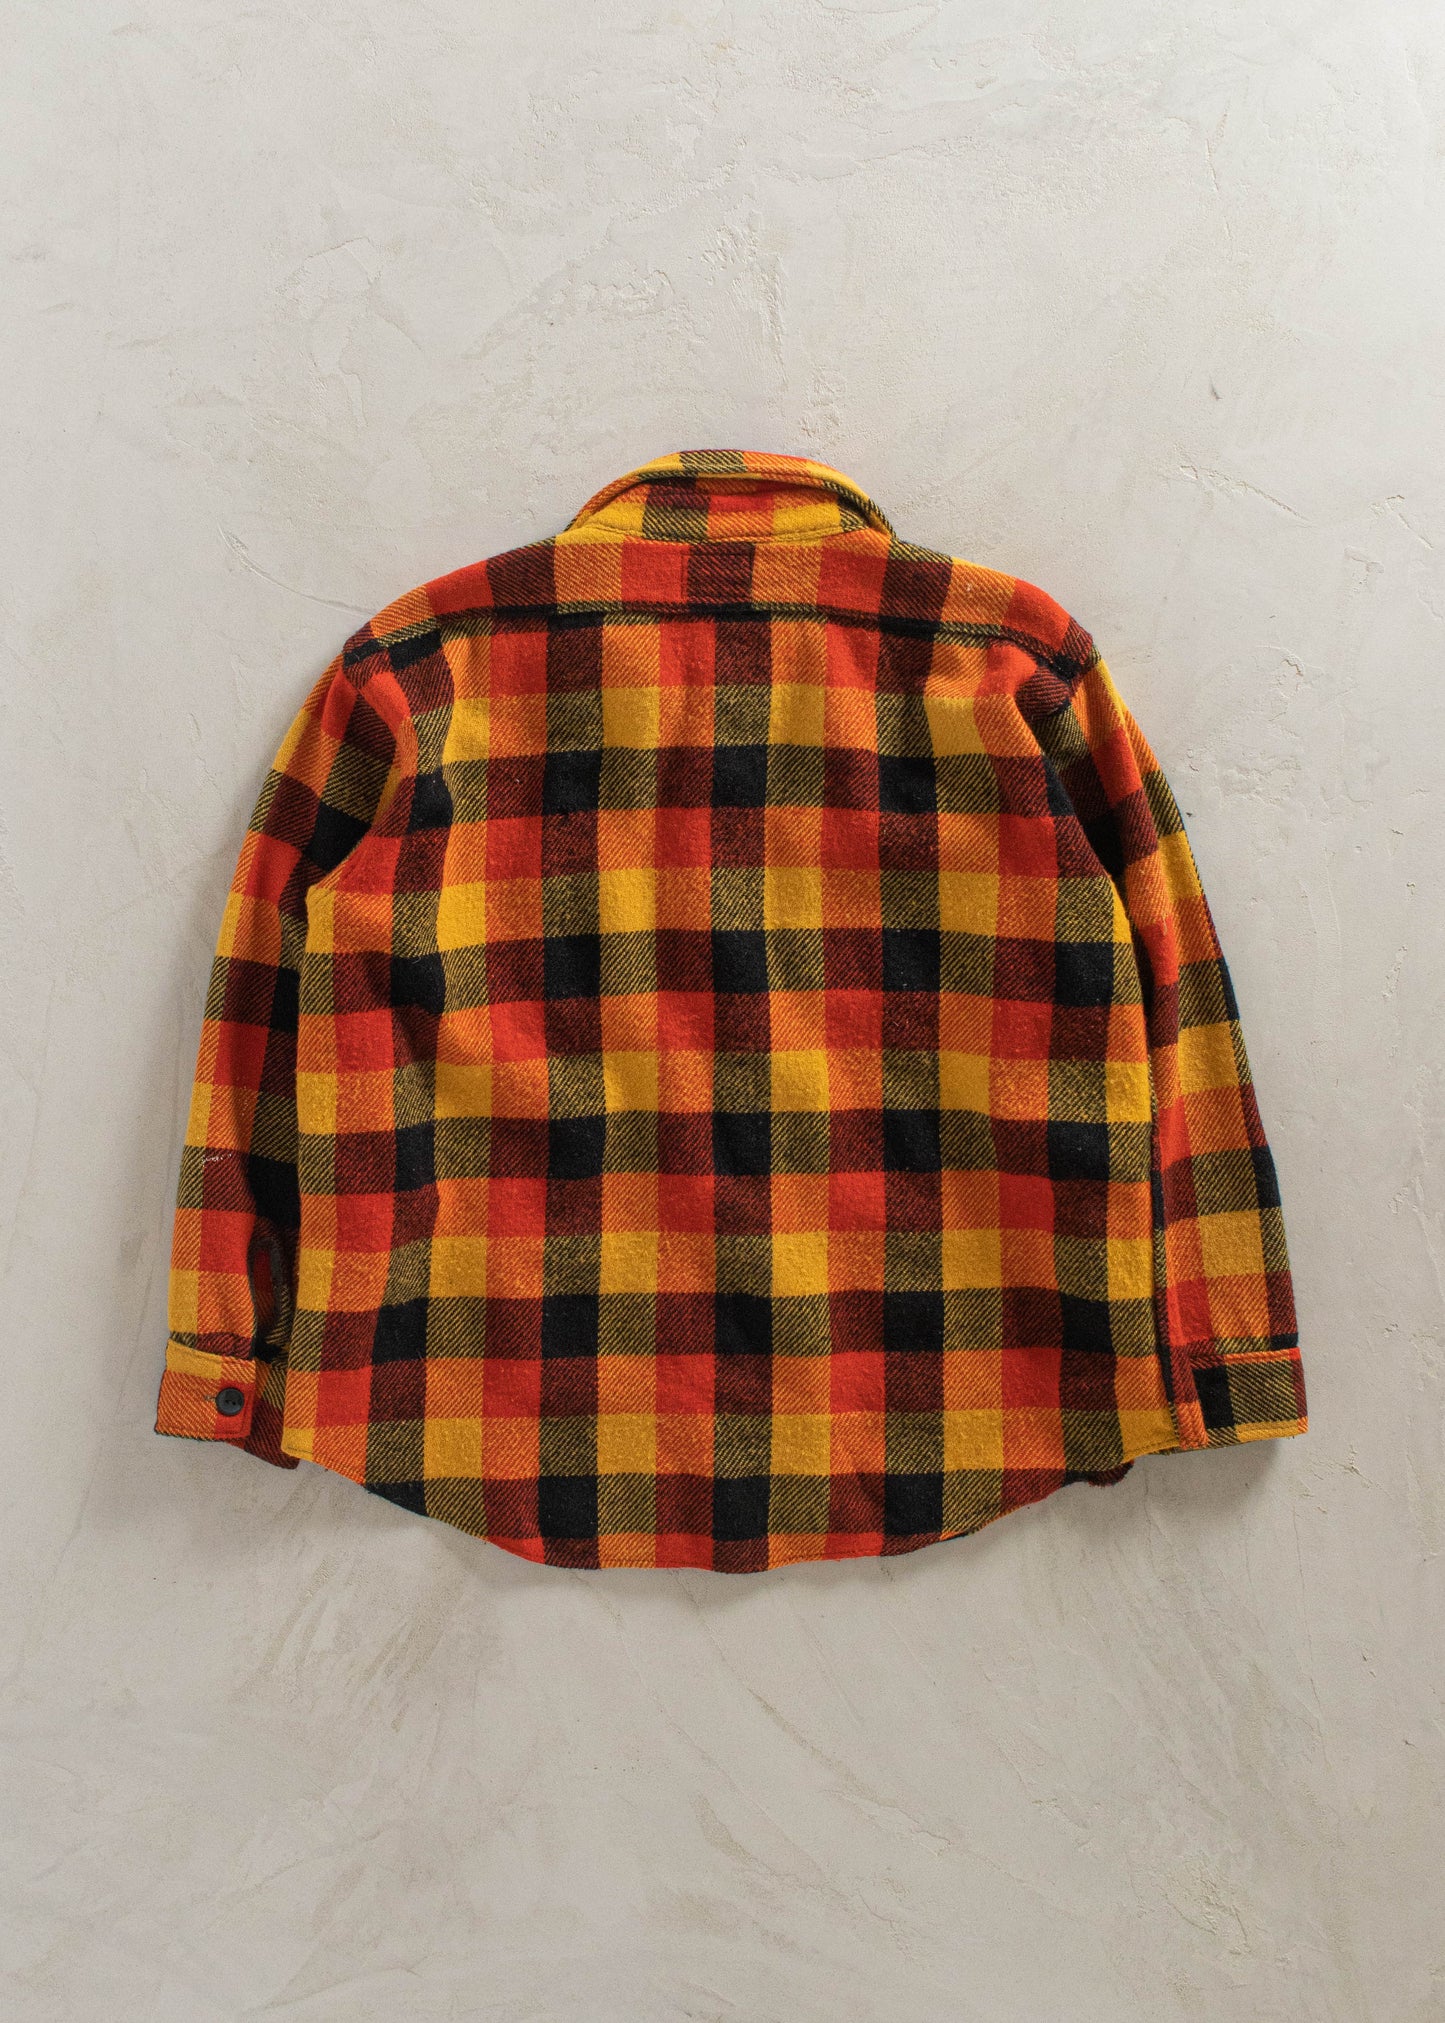 1970s Melton Wool Flannel Button Up Shirt Size L/XL